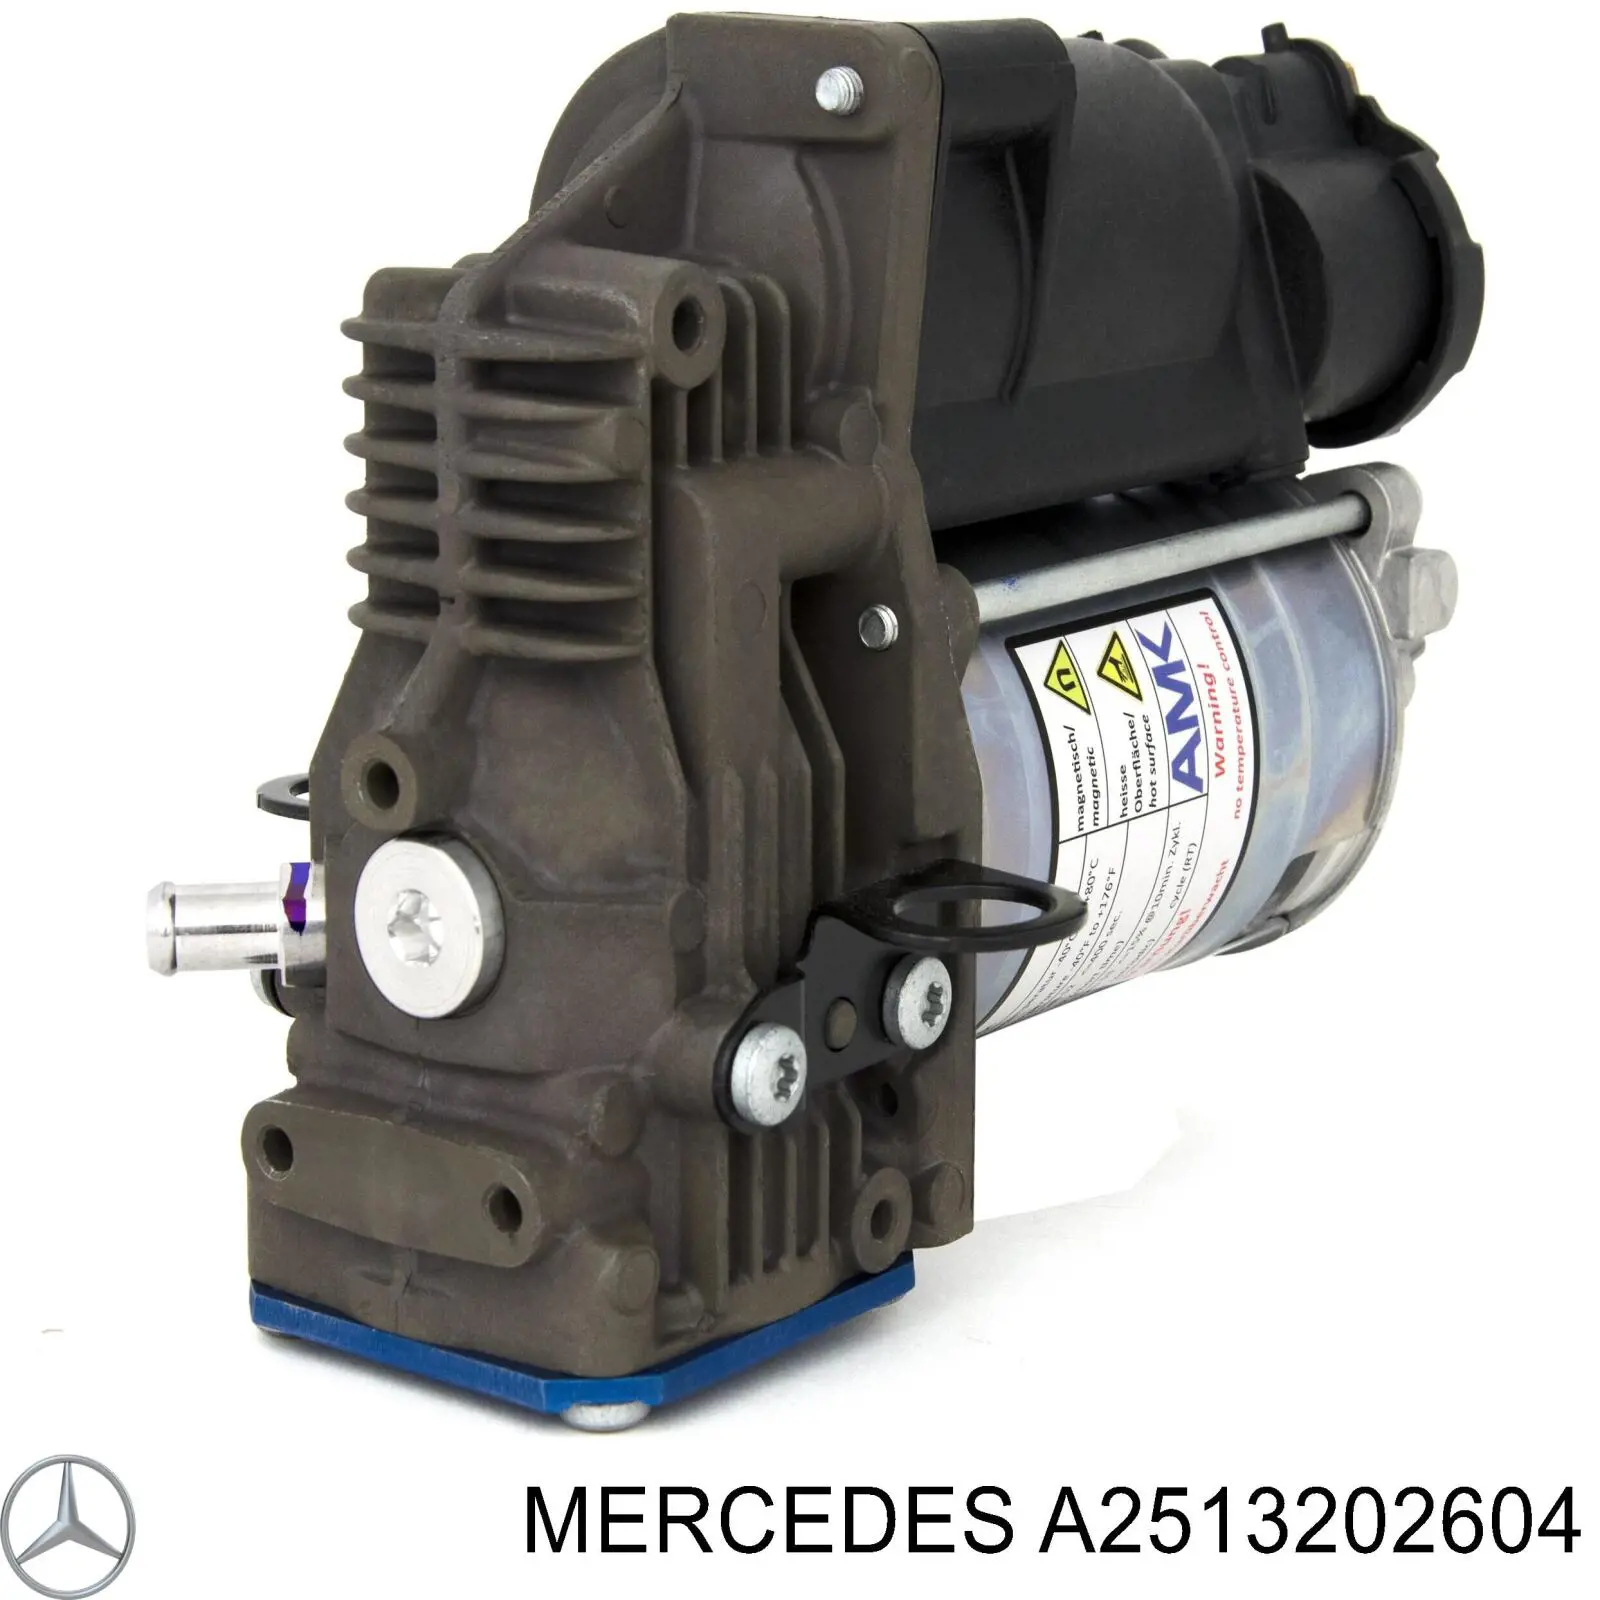 A2513202604 Mercedes компрессор пневмоподкачки (амортизаторов)